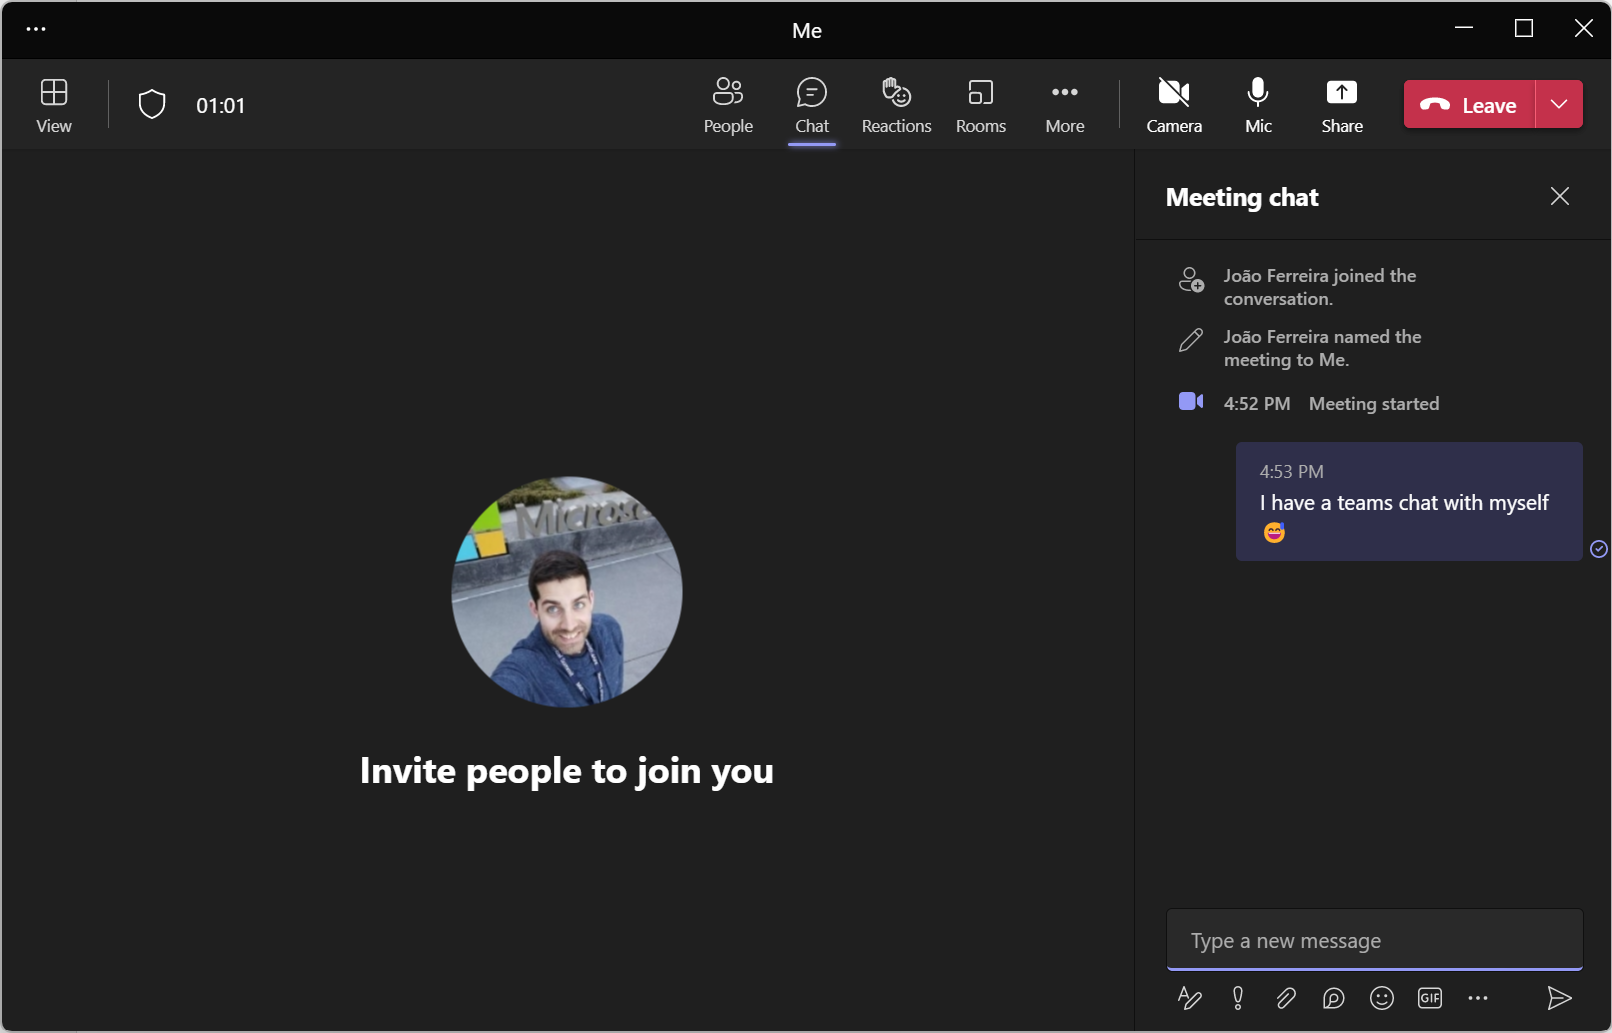 Create a self-chat in Microsoft Teams